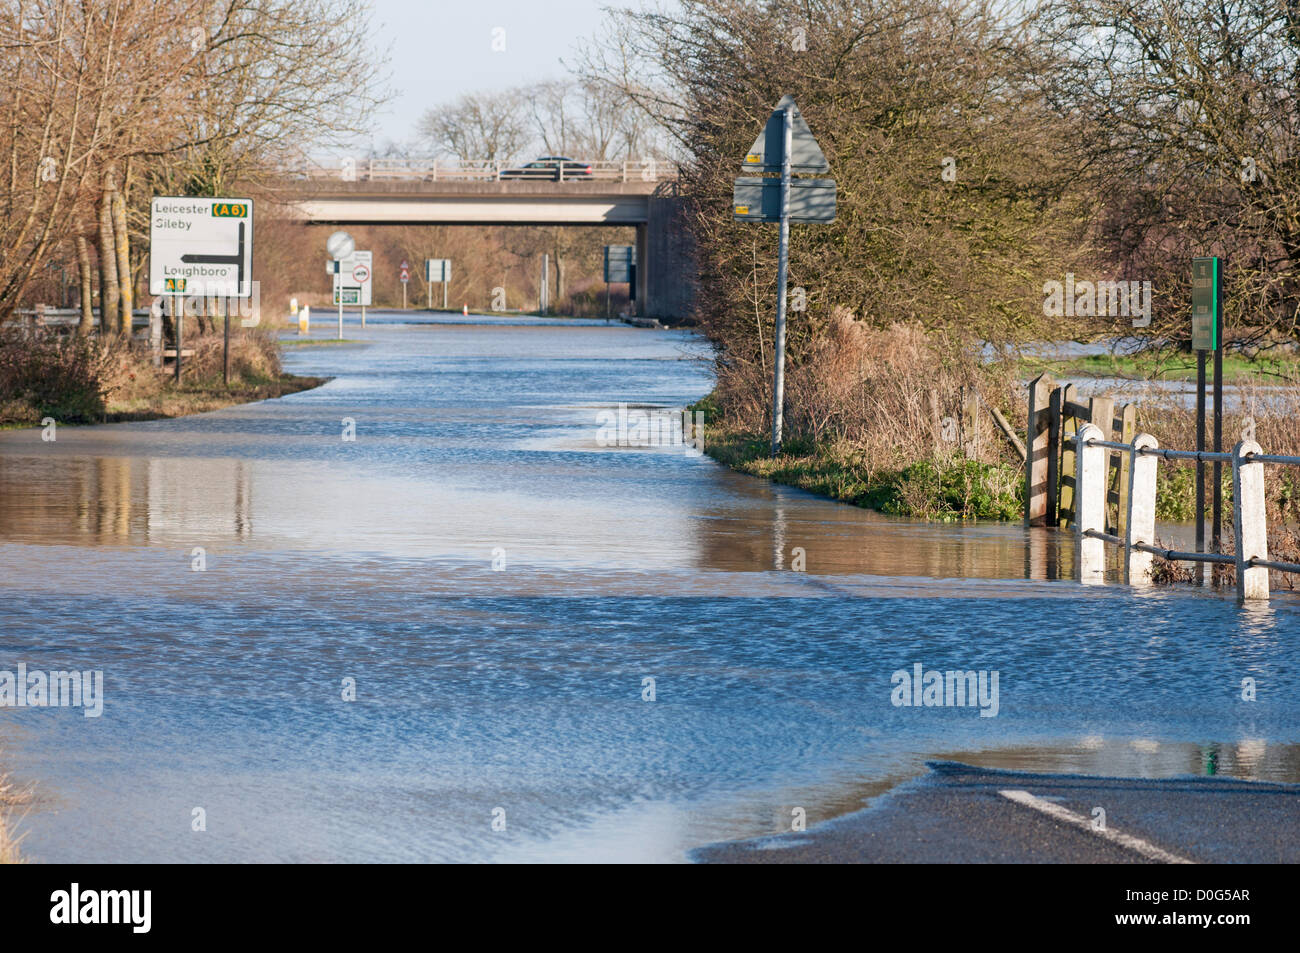 Mountsorrel, Leicestershire, UK. 25th Nov, 2012.   Flooded road in Mountsorrel, Leicestershire.  Credit: SCFotos/ Alamy Live News Stock Photo